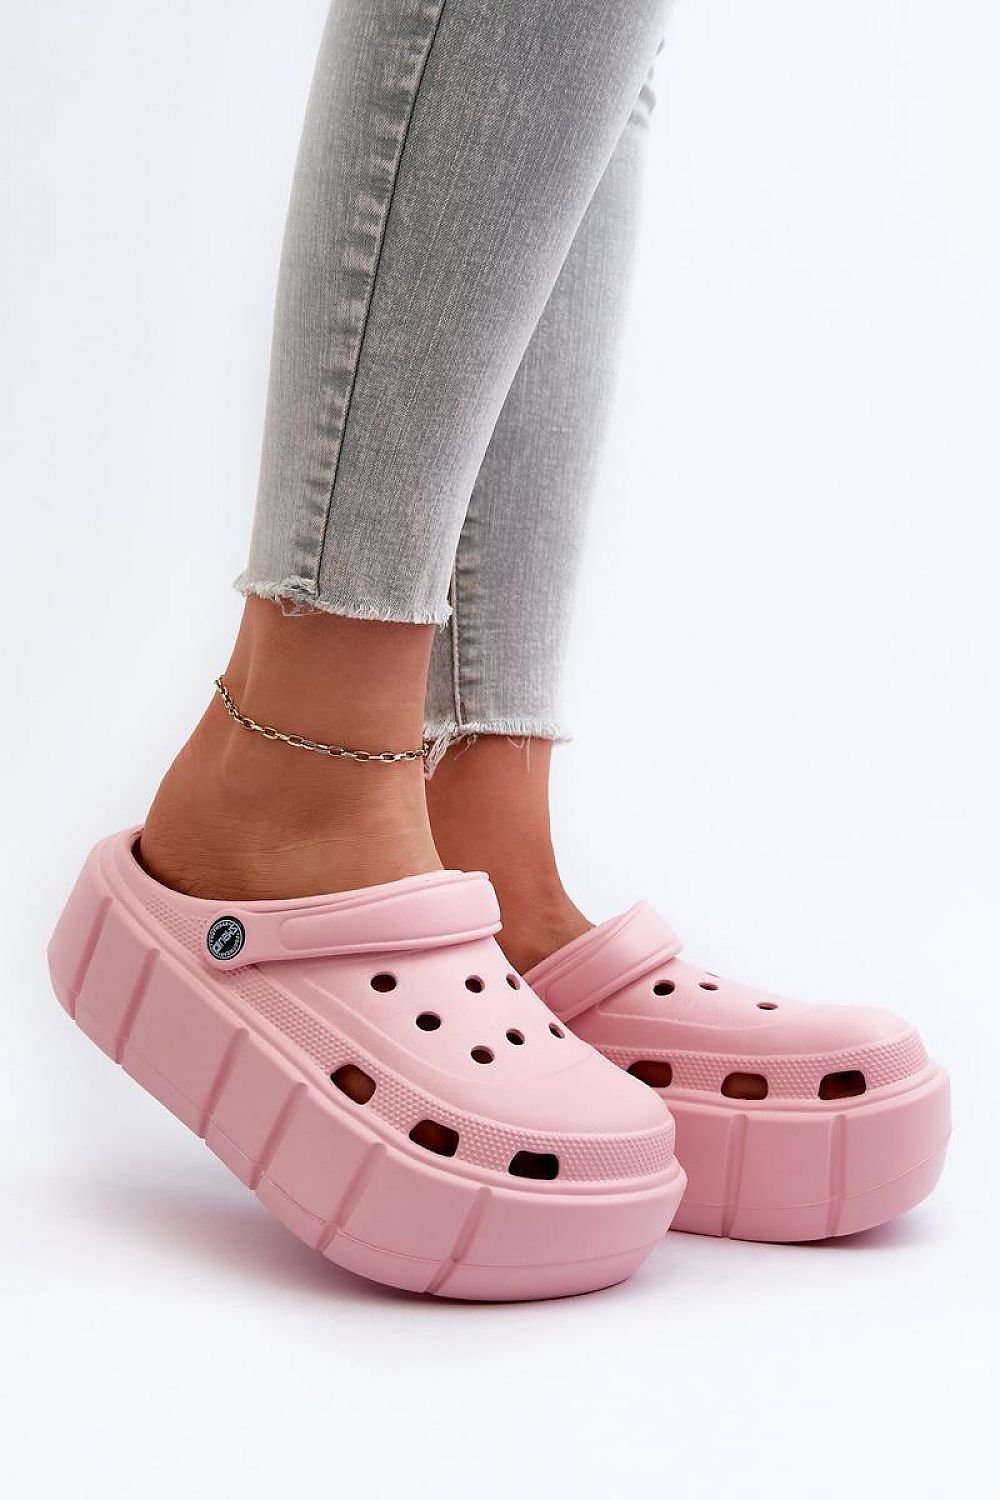 TEEK - Platform Strap Chunk Shoes SHOES TEEK MH pink 7.5 